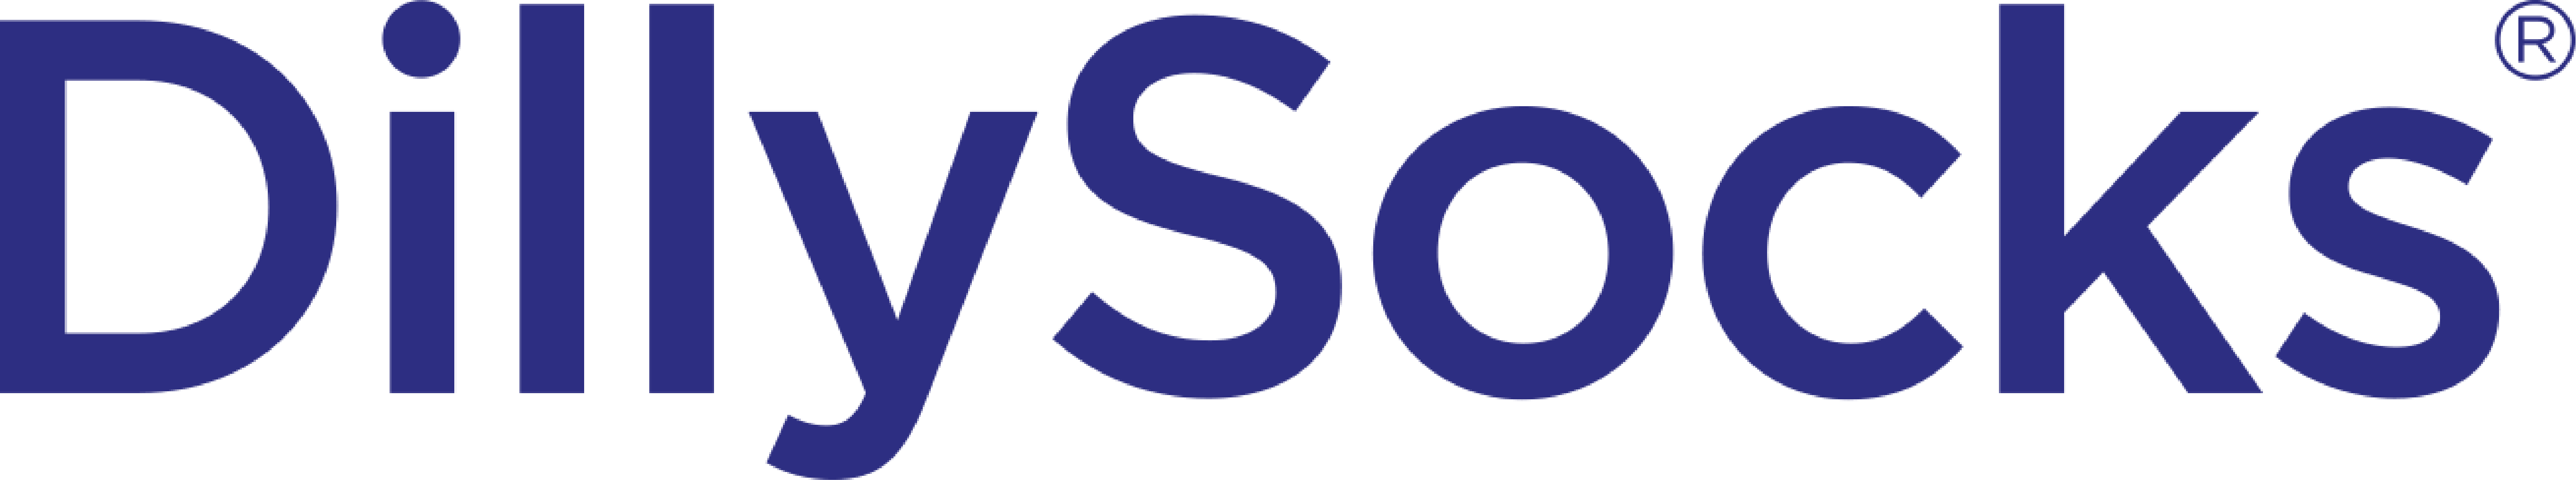 DillySocks Logo